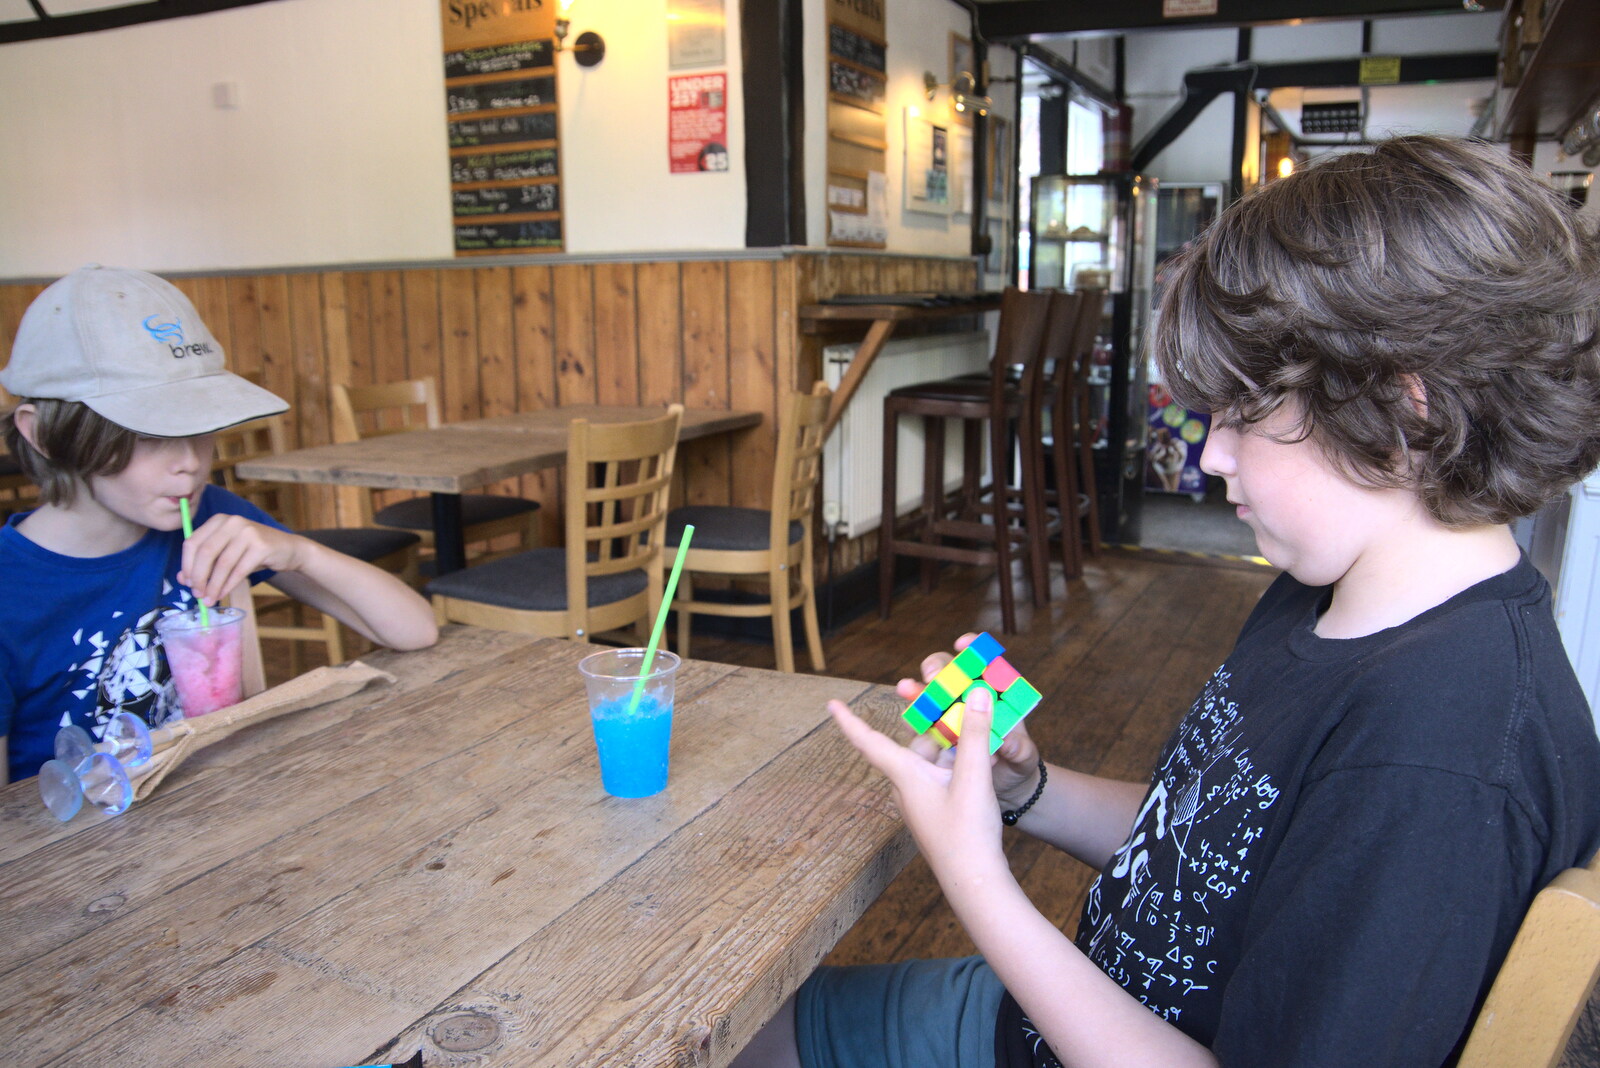 A Trip to Framlingham, Suffolk - 28th July 2022: Fred's on the Rubik's cube again